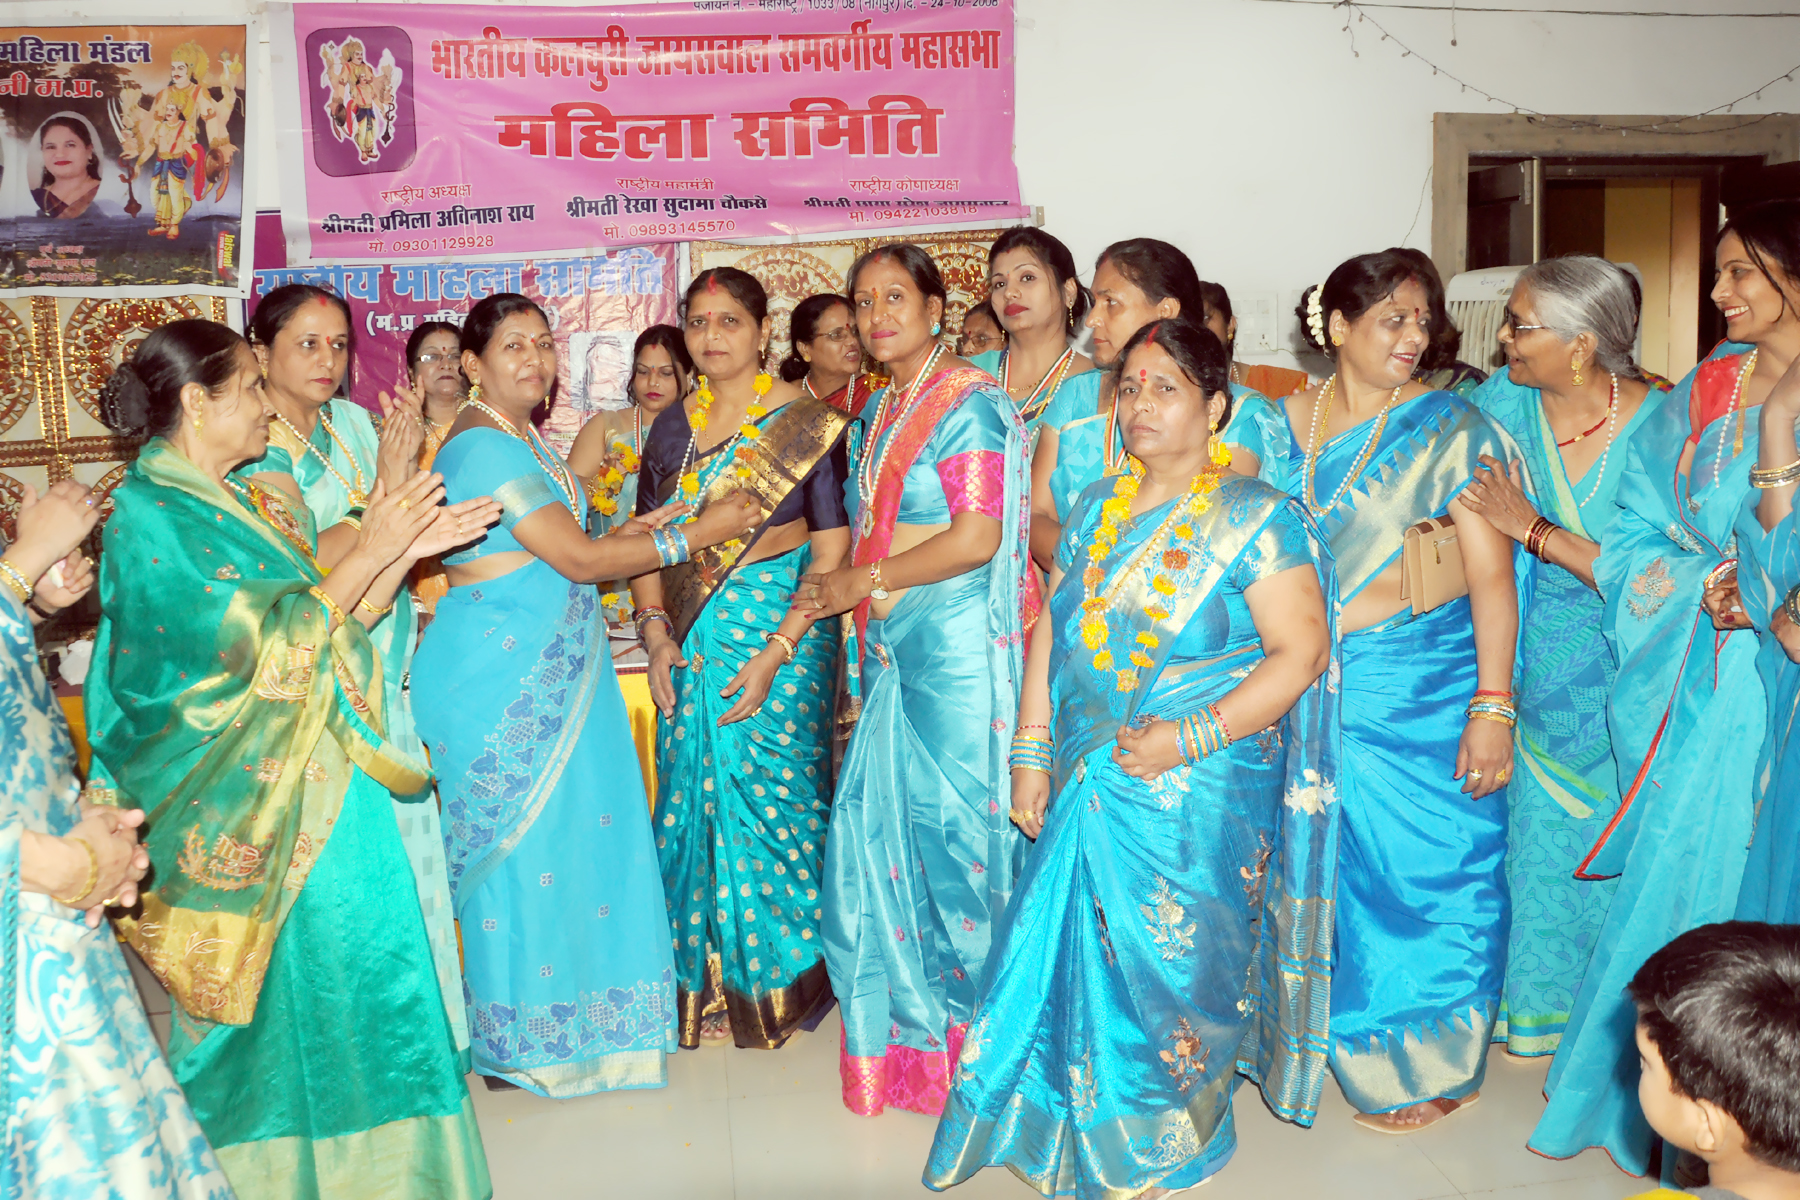 Women take oath of social unity and harmony